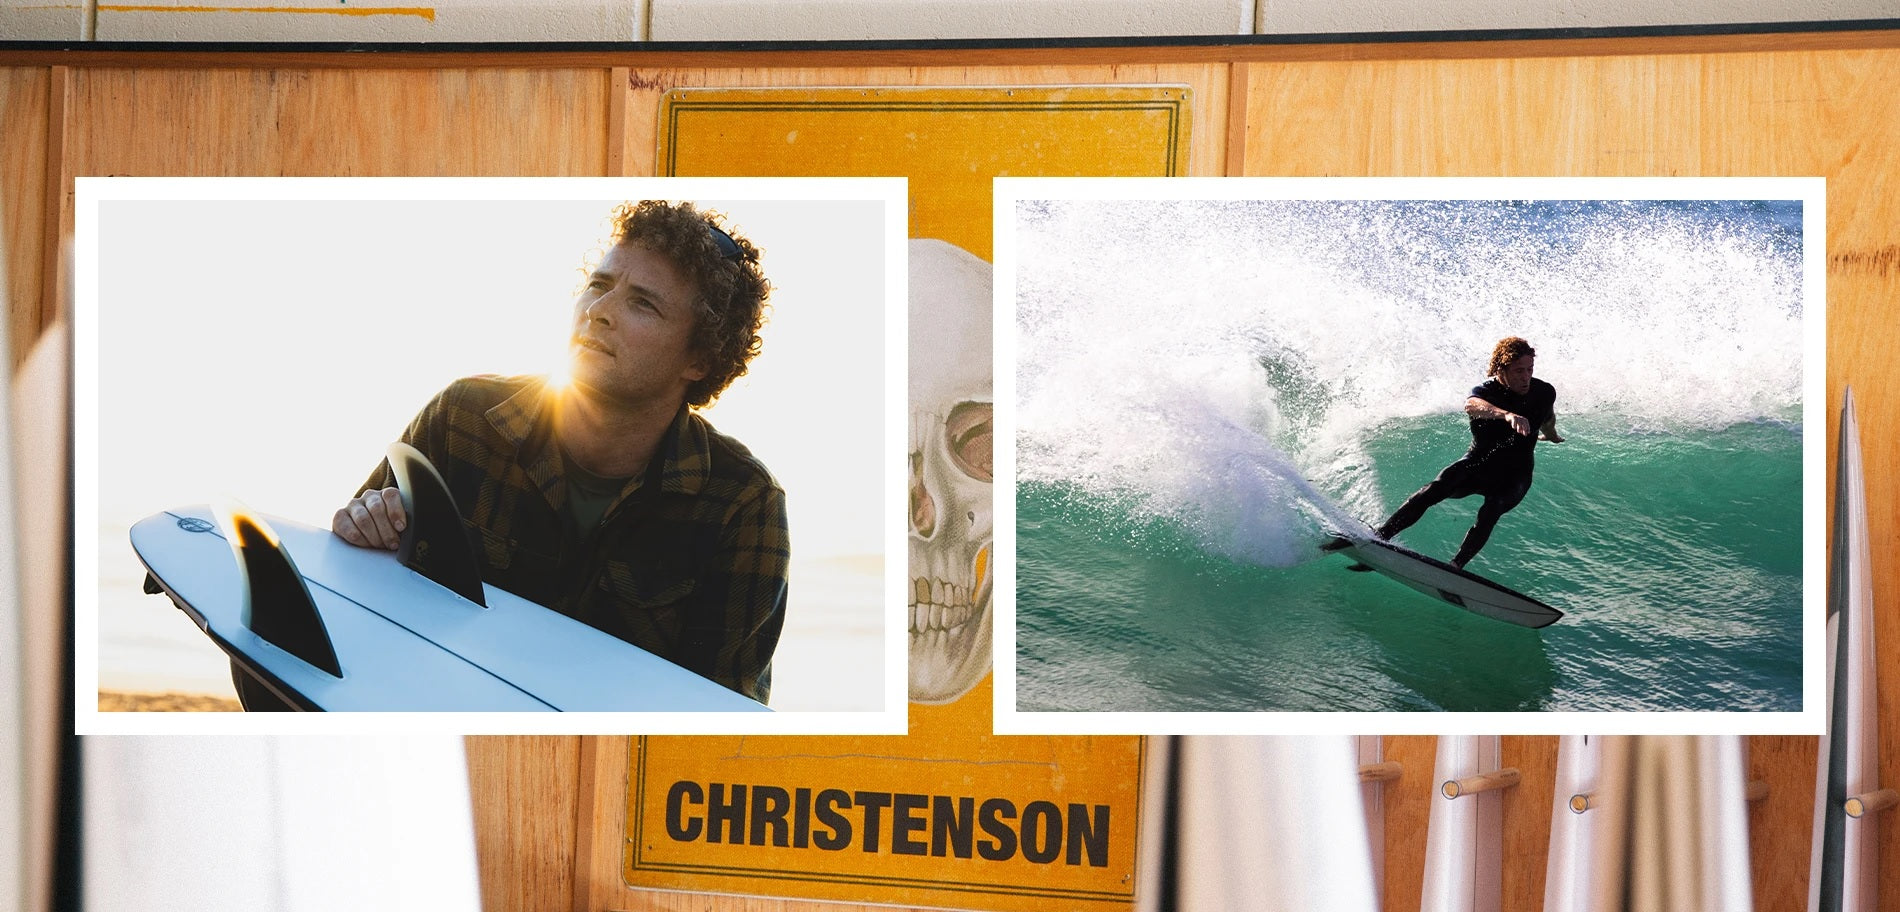 Who is Chris Christenson?